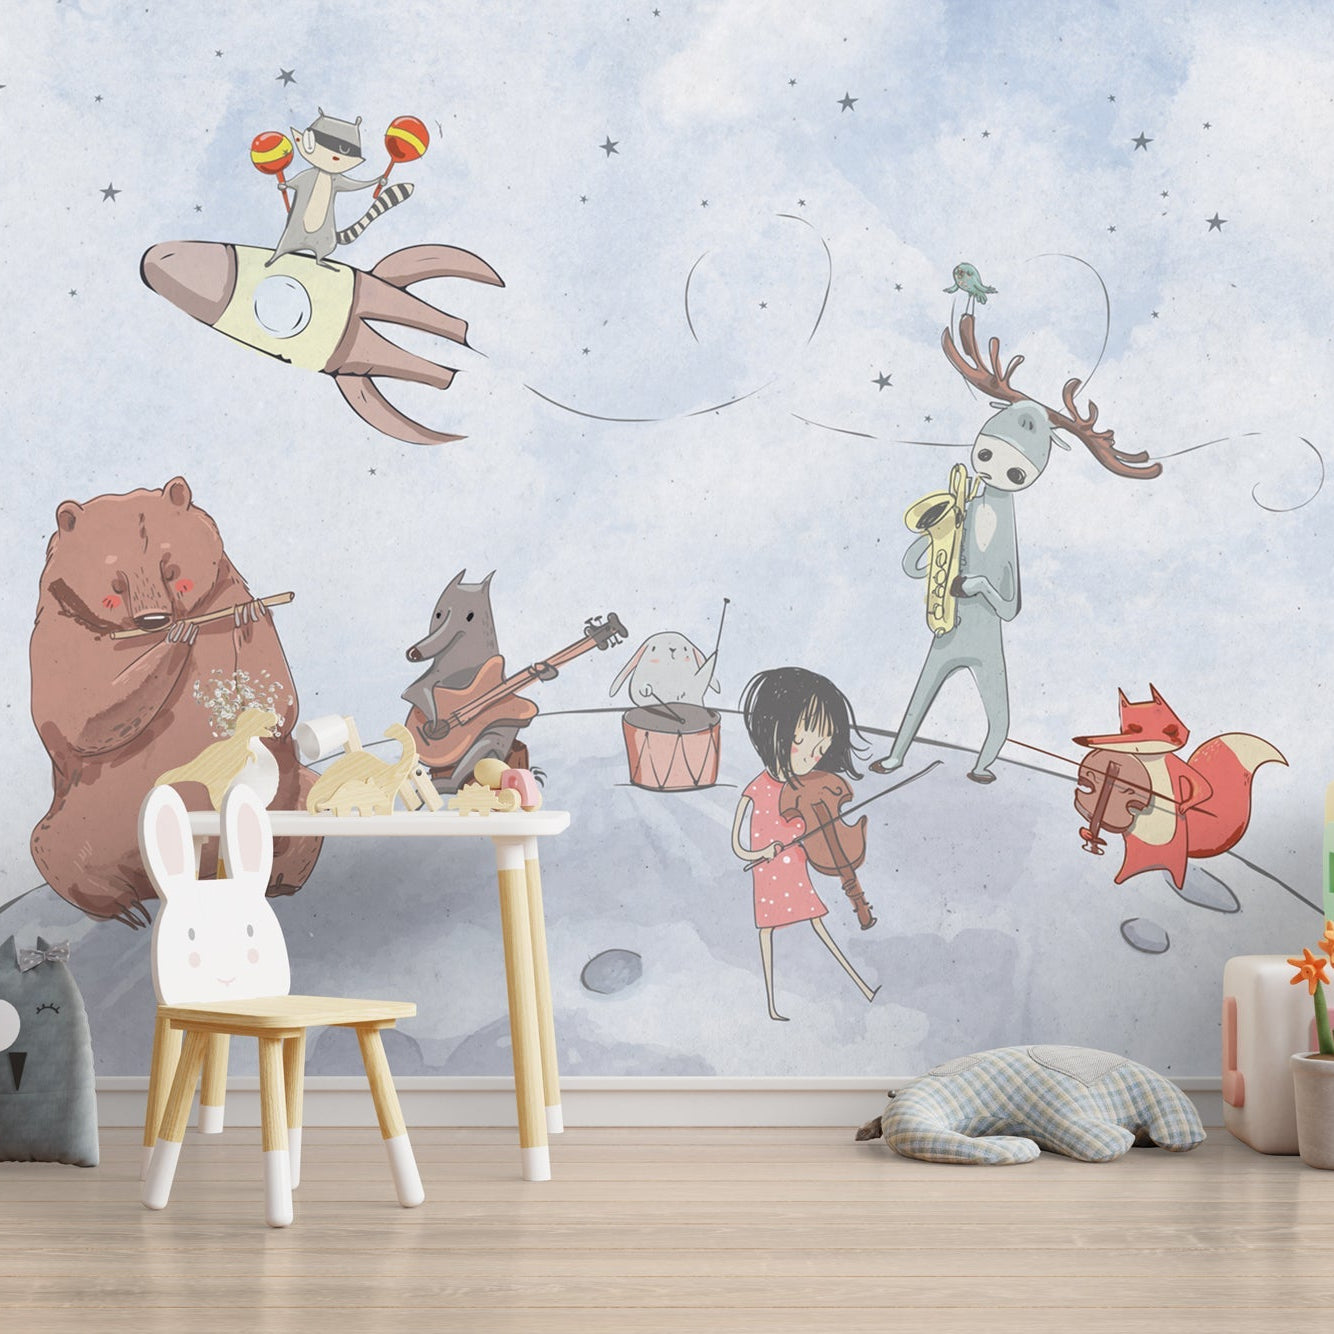 Nordic Animals Party - Kids Room Wallpaper Mural - GraffitiWallArt